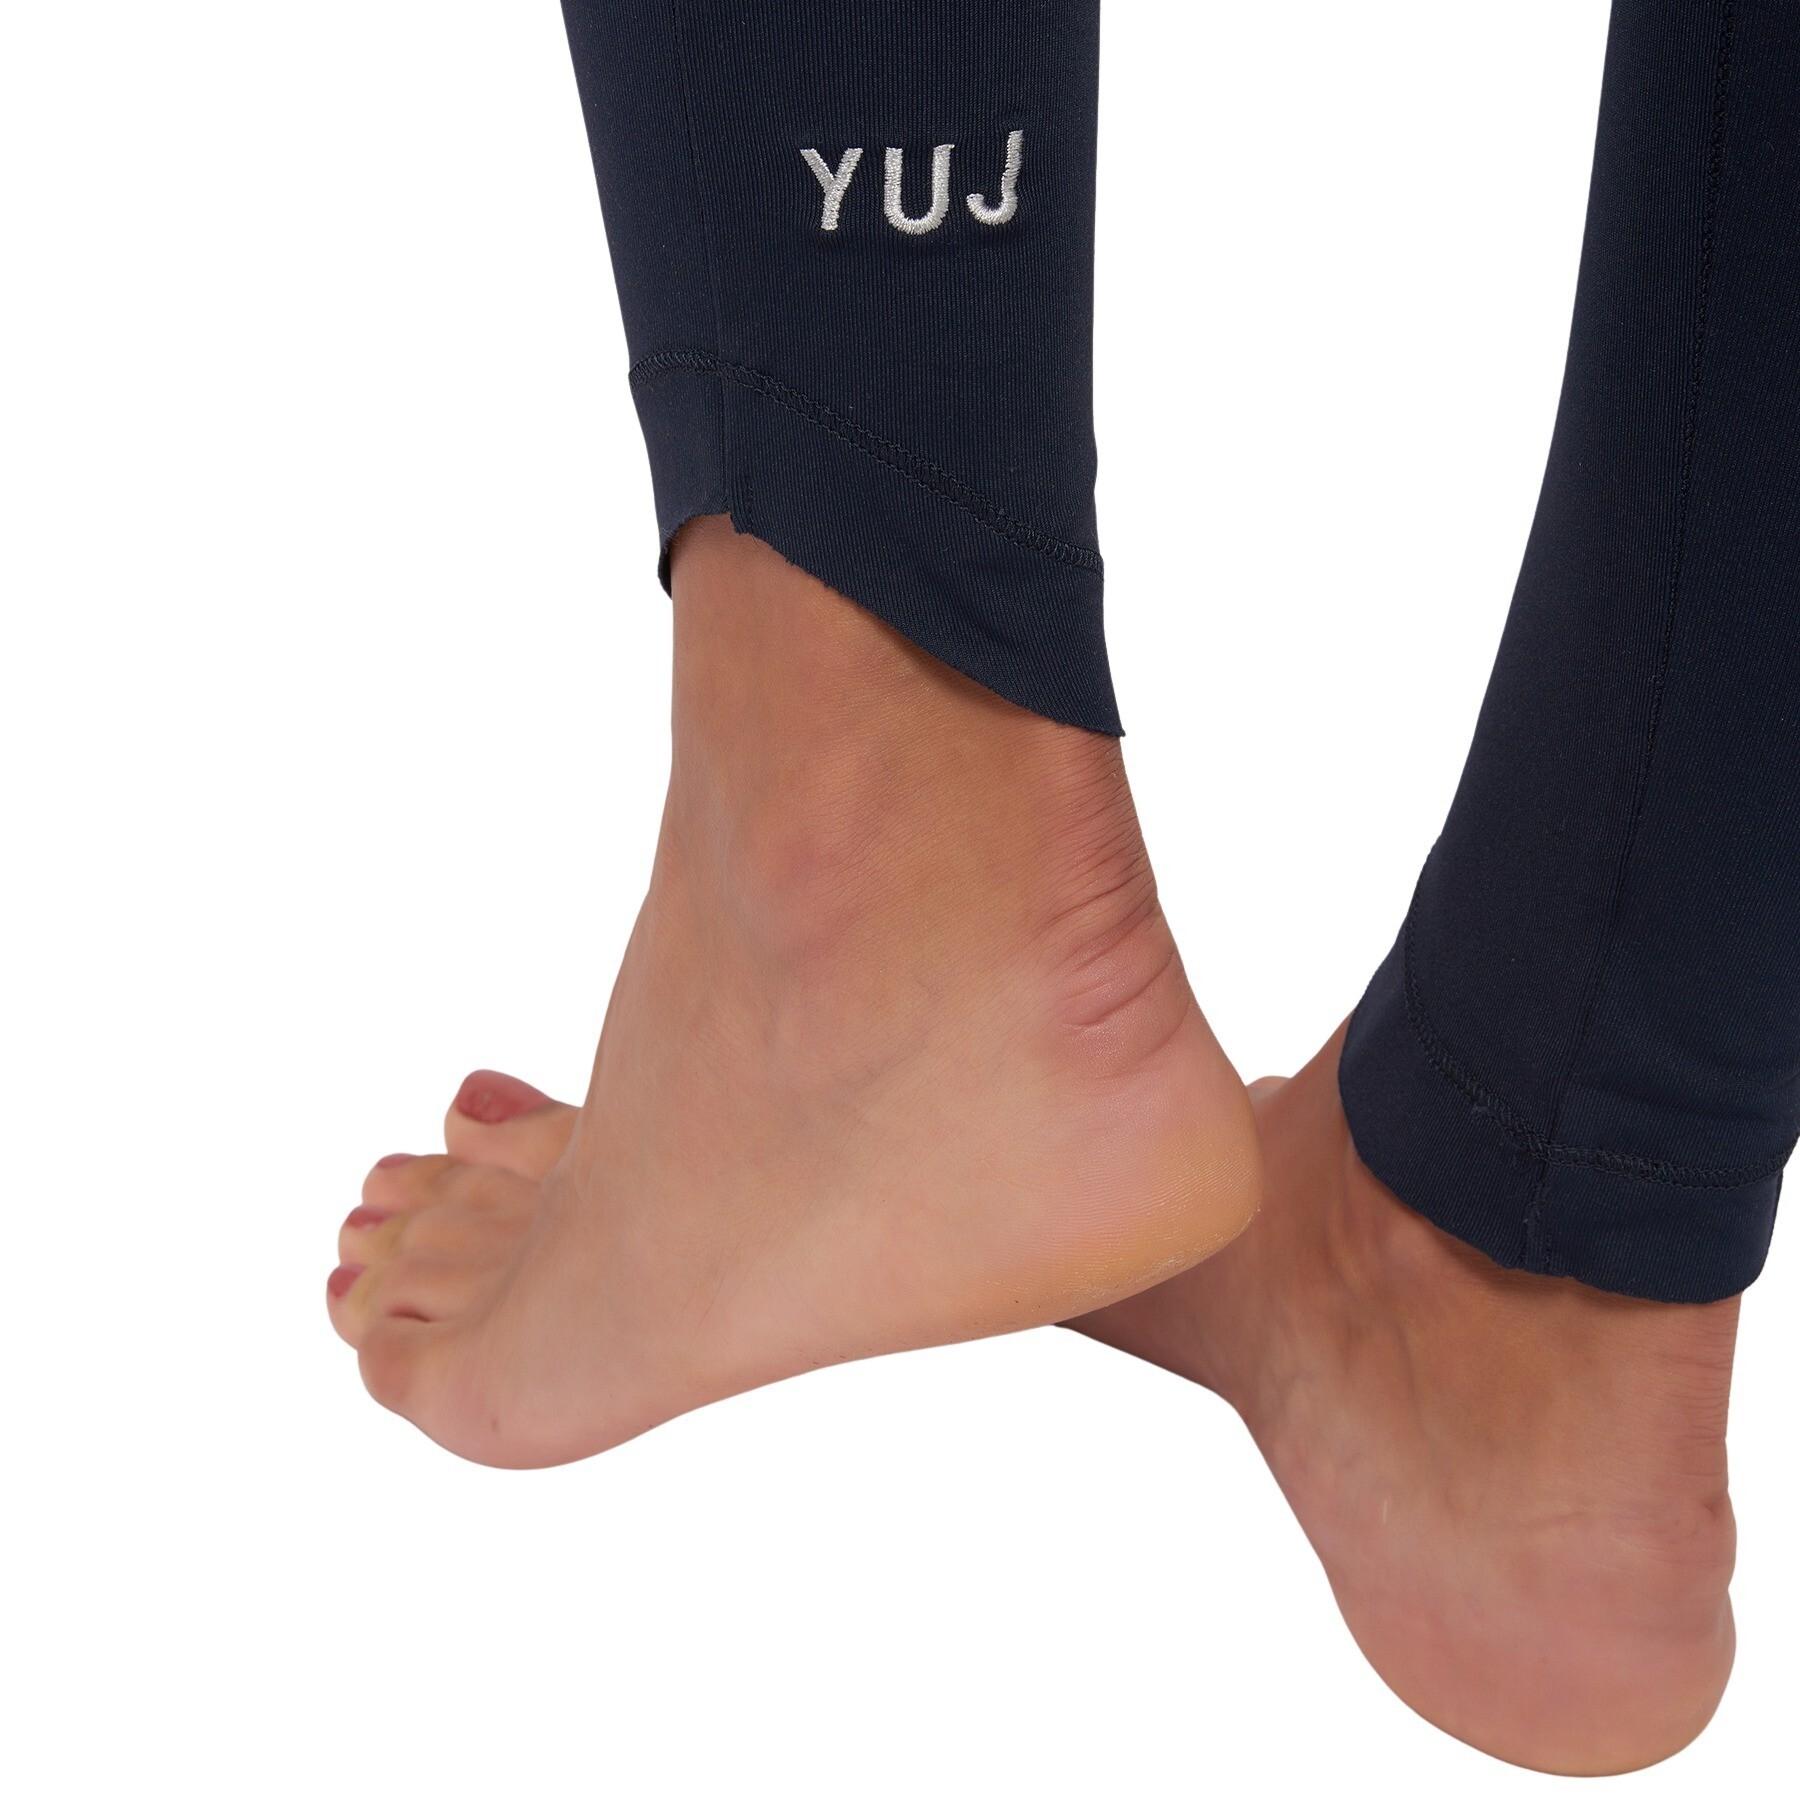 Yuj Ladies Black/Silver Mulhadara High-Waist Leggings, Size Small